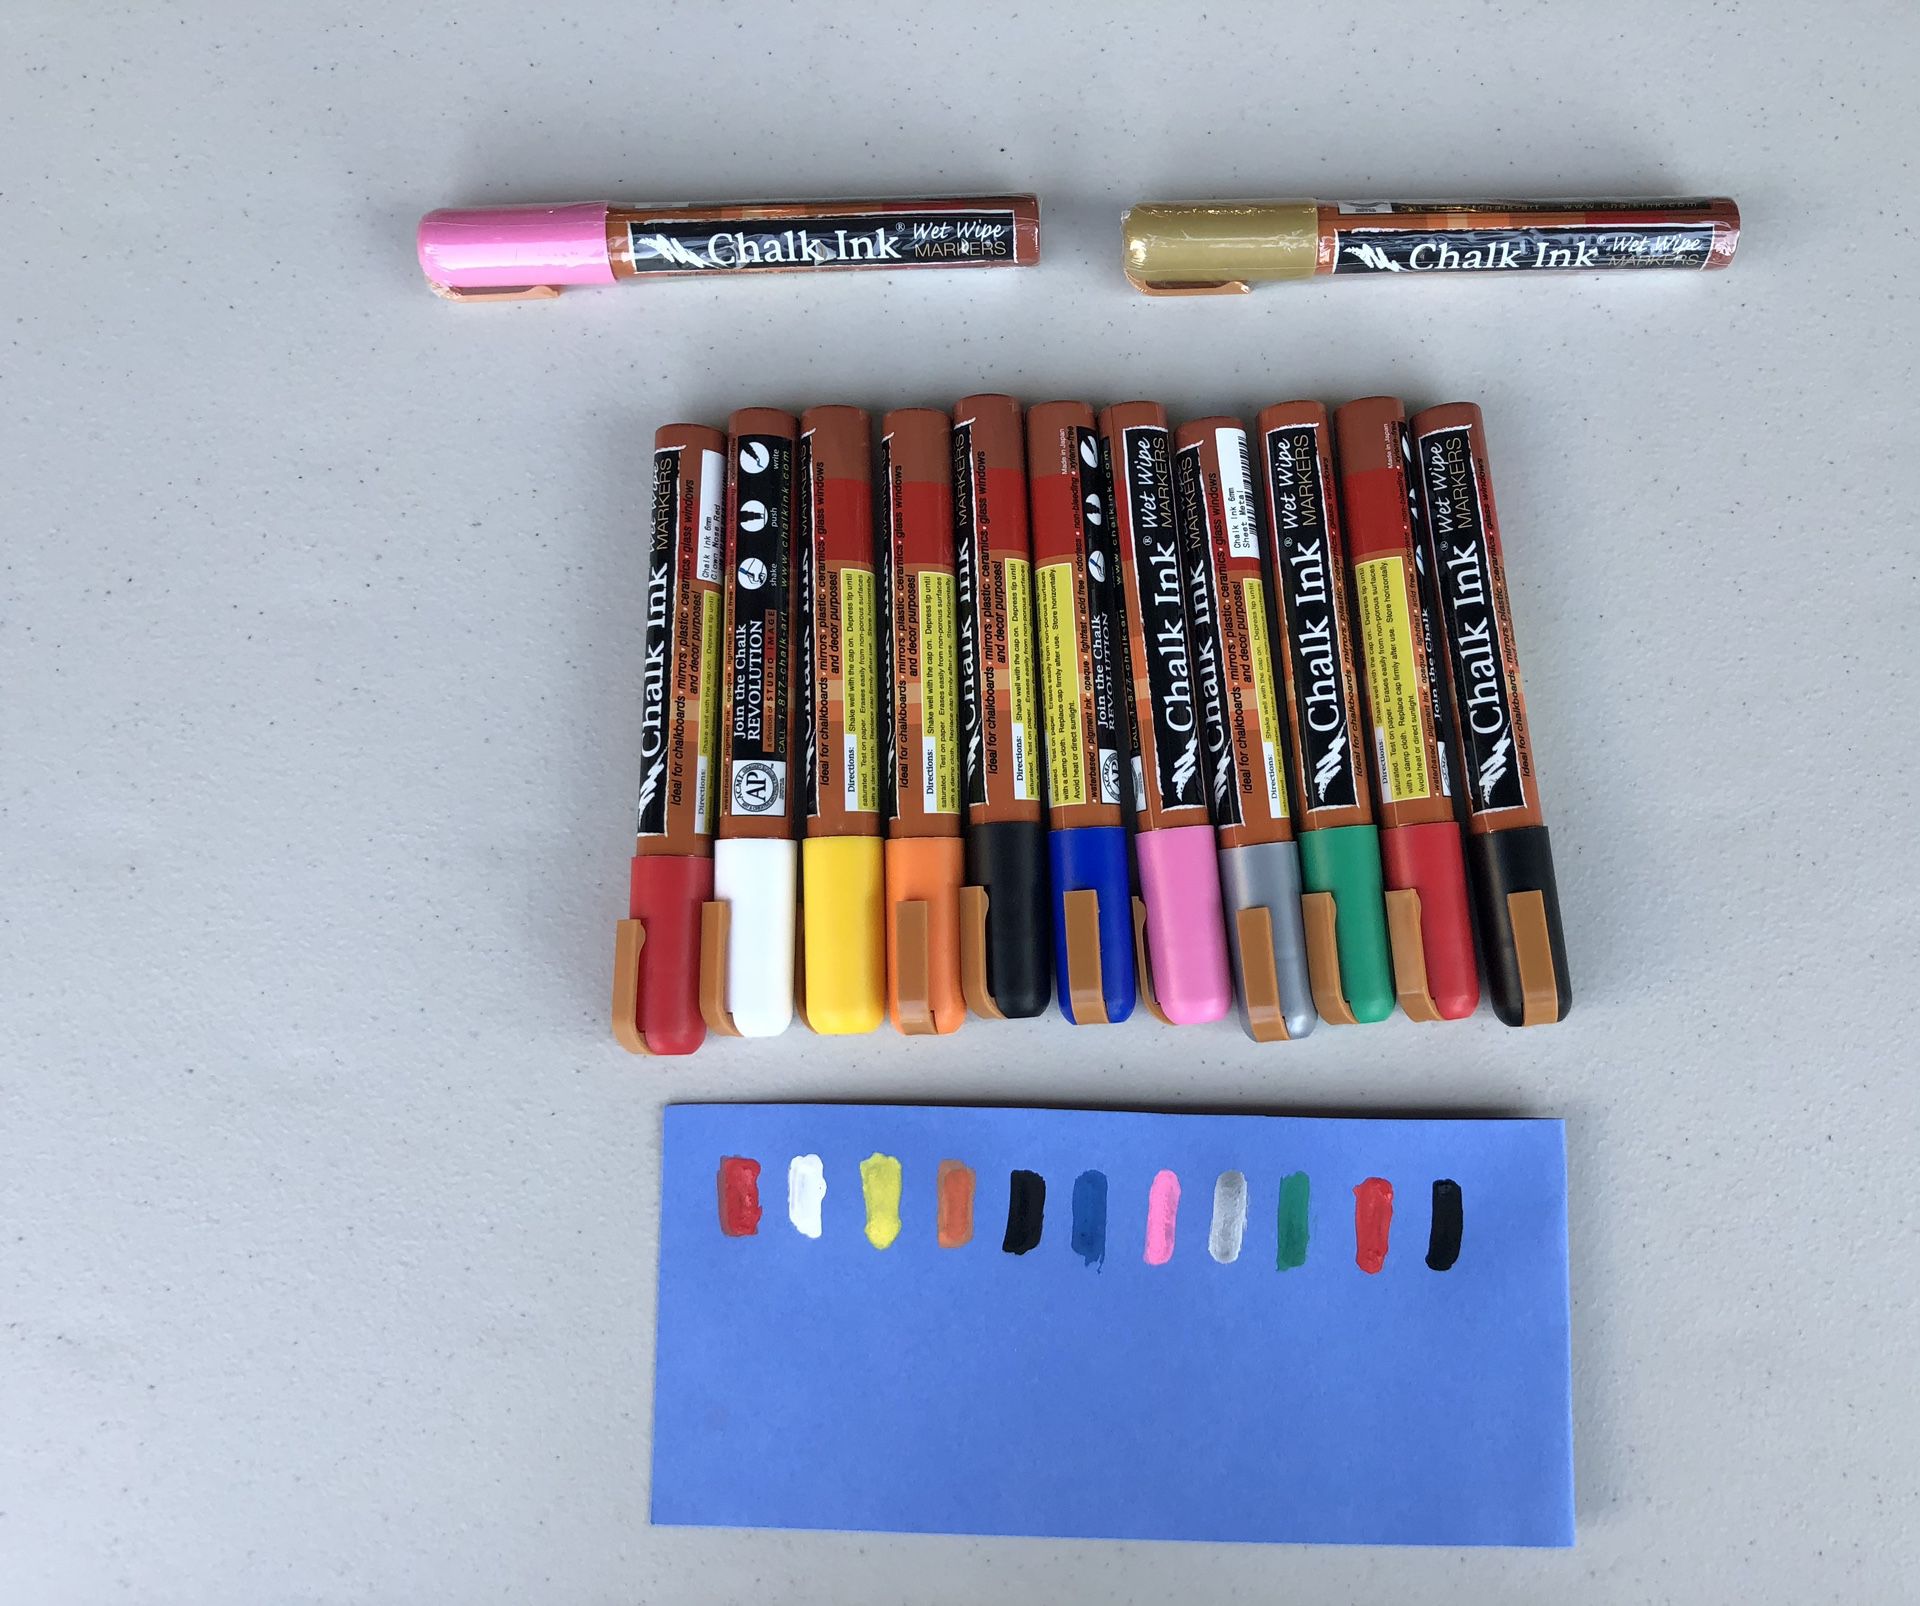 13 Chalk Ink Erasable Liquid Wet Wipe 6 mm Markers w/ Chisel Tips